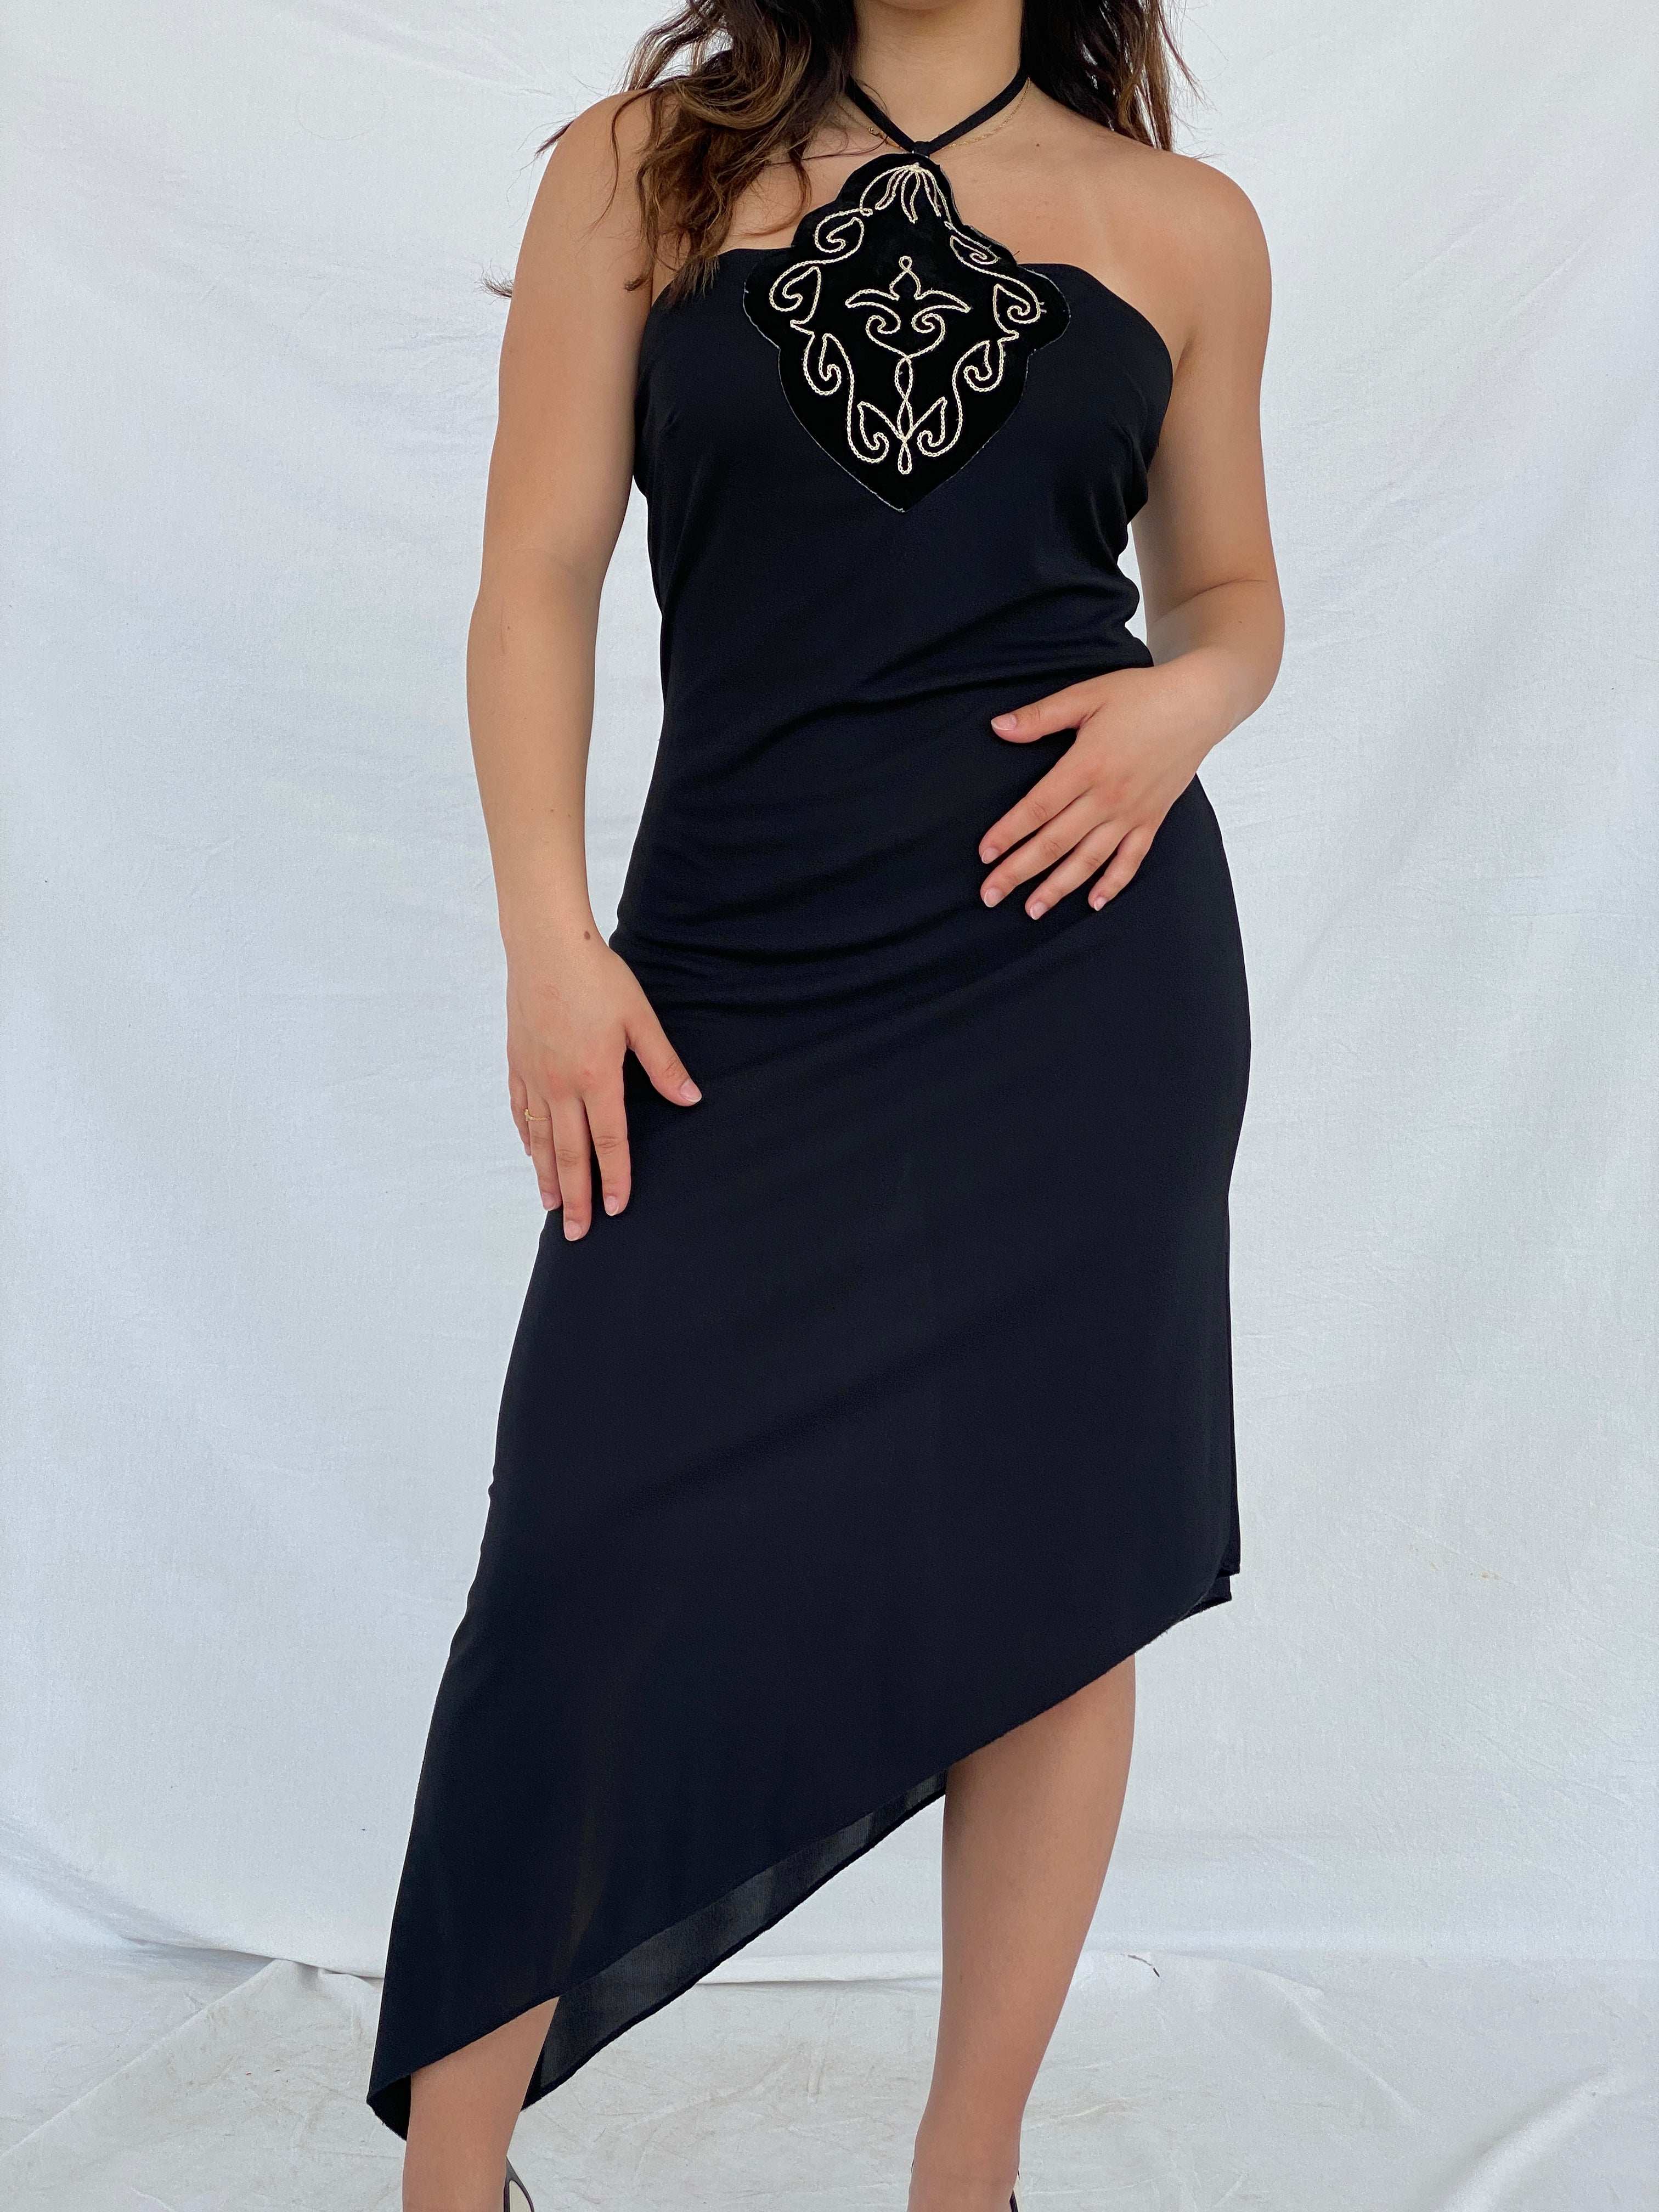 Gorgeous Vintage H.FLO Black Halter Dress - Balagan Vintage Midi Dress 90s dress, black dress, floral dress, Lana, midi dress, NEW IN